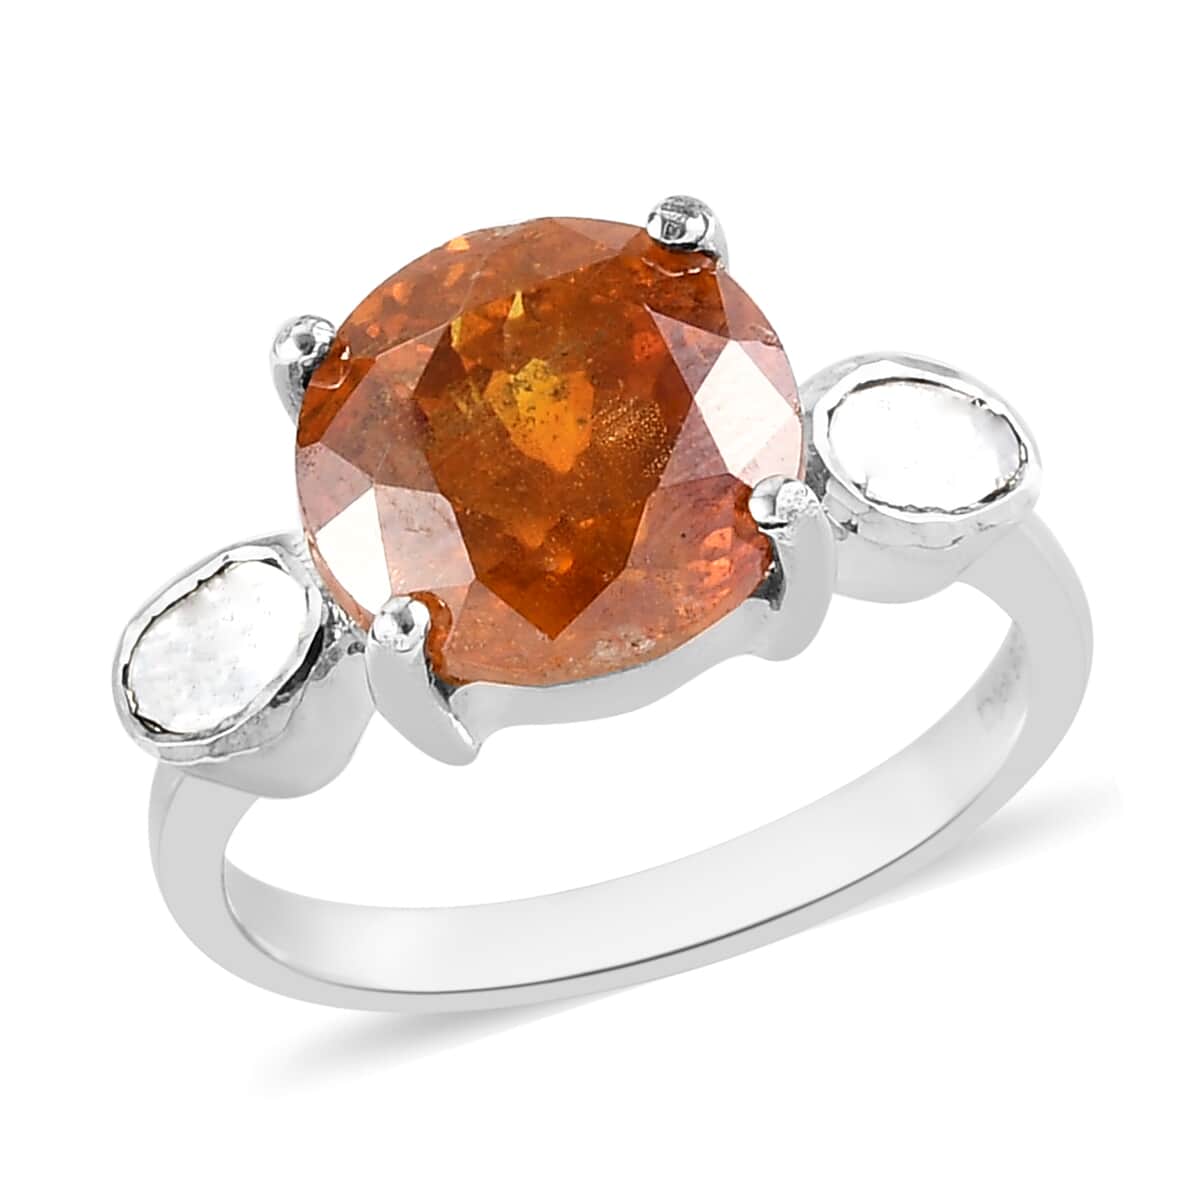 Picos Altos Light Orange Sphalerite and Polki Diamond Ring in Platinum Over Sterling Silver 5.35 ctw image number 0